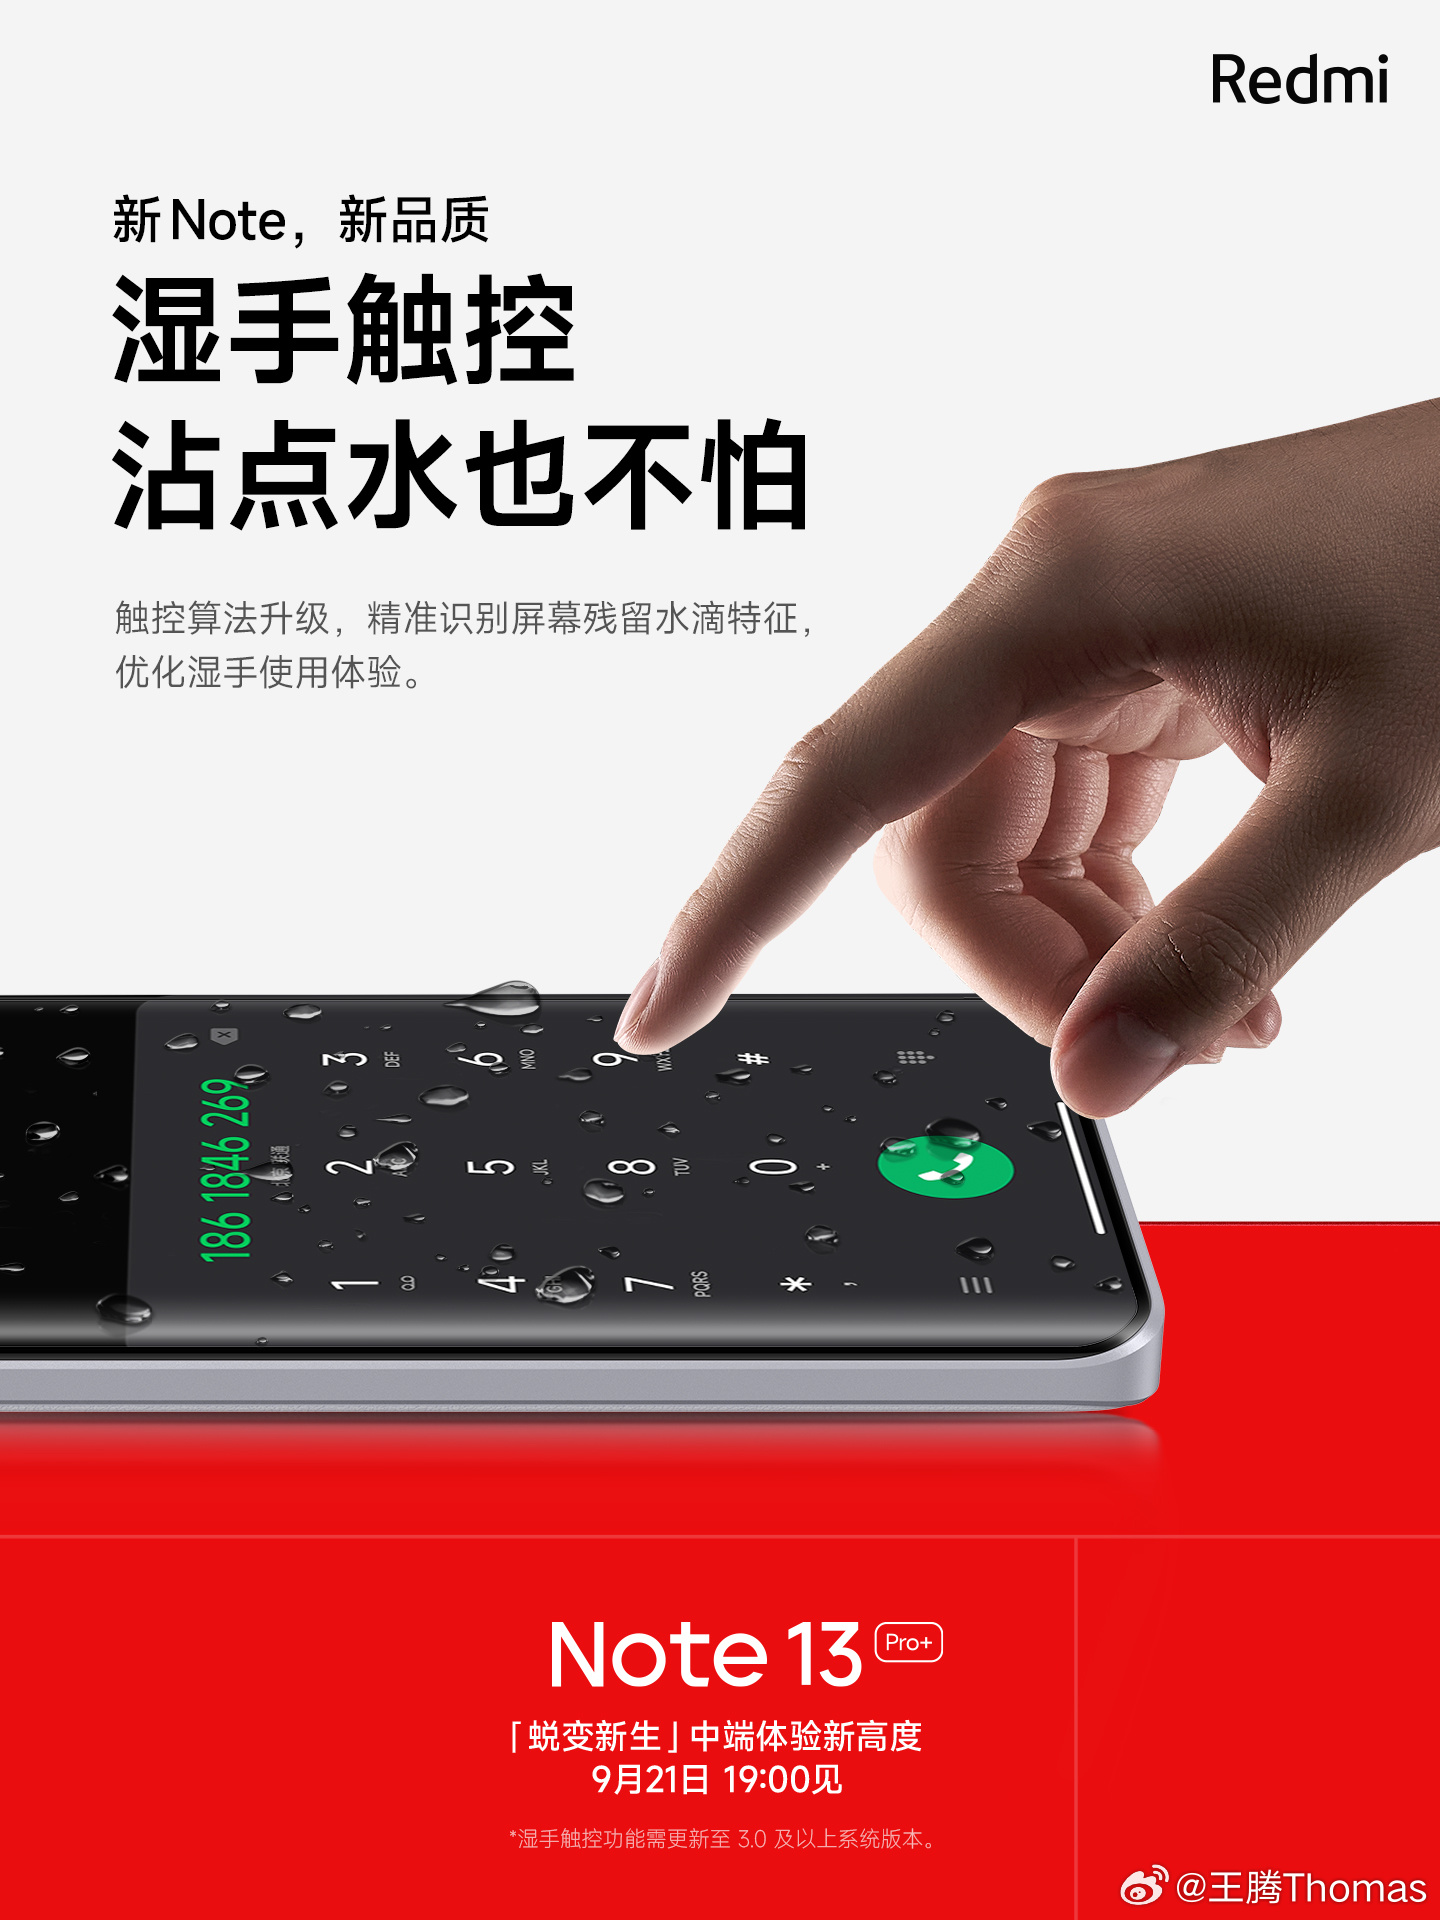 Xiaomi Redmi Note 13 / 13 Pro Plus International/Global (Official